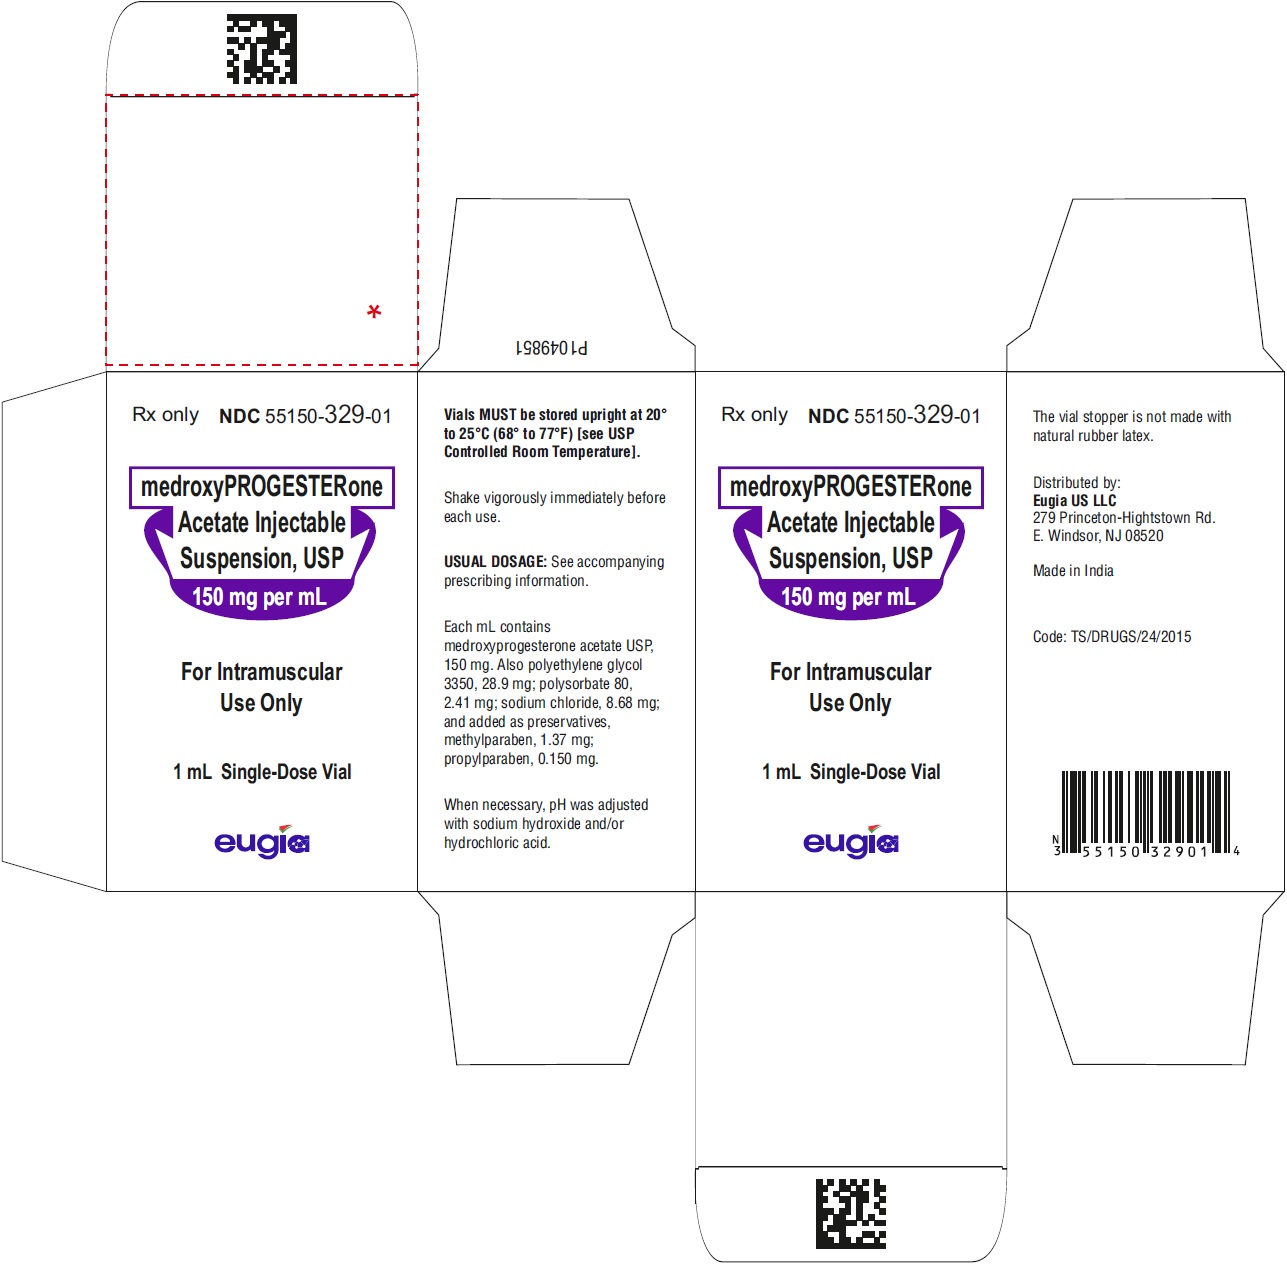 PACKAGE LABEL-PRINCIPAL DISPLAY PANEL-150 mg per mL - Container-Carton (1 Vial)